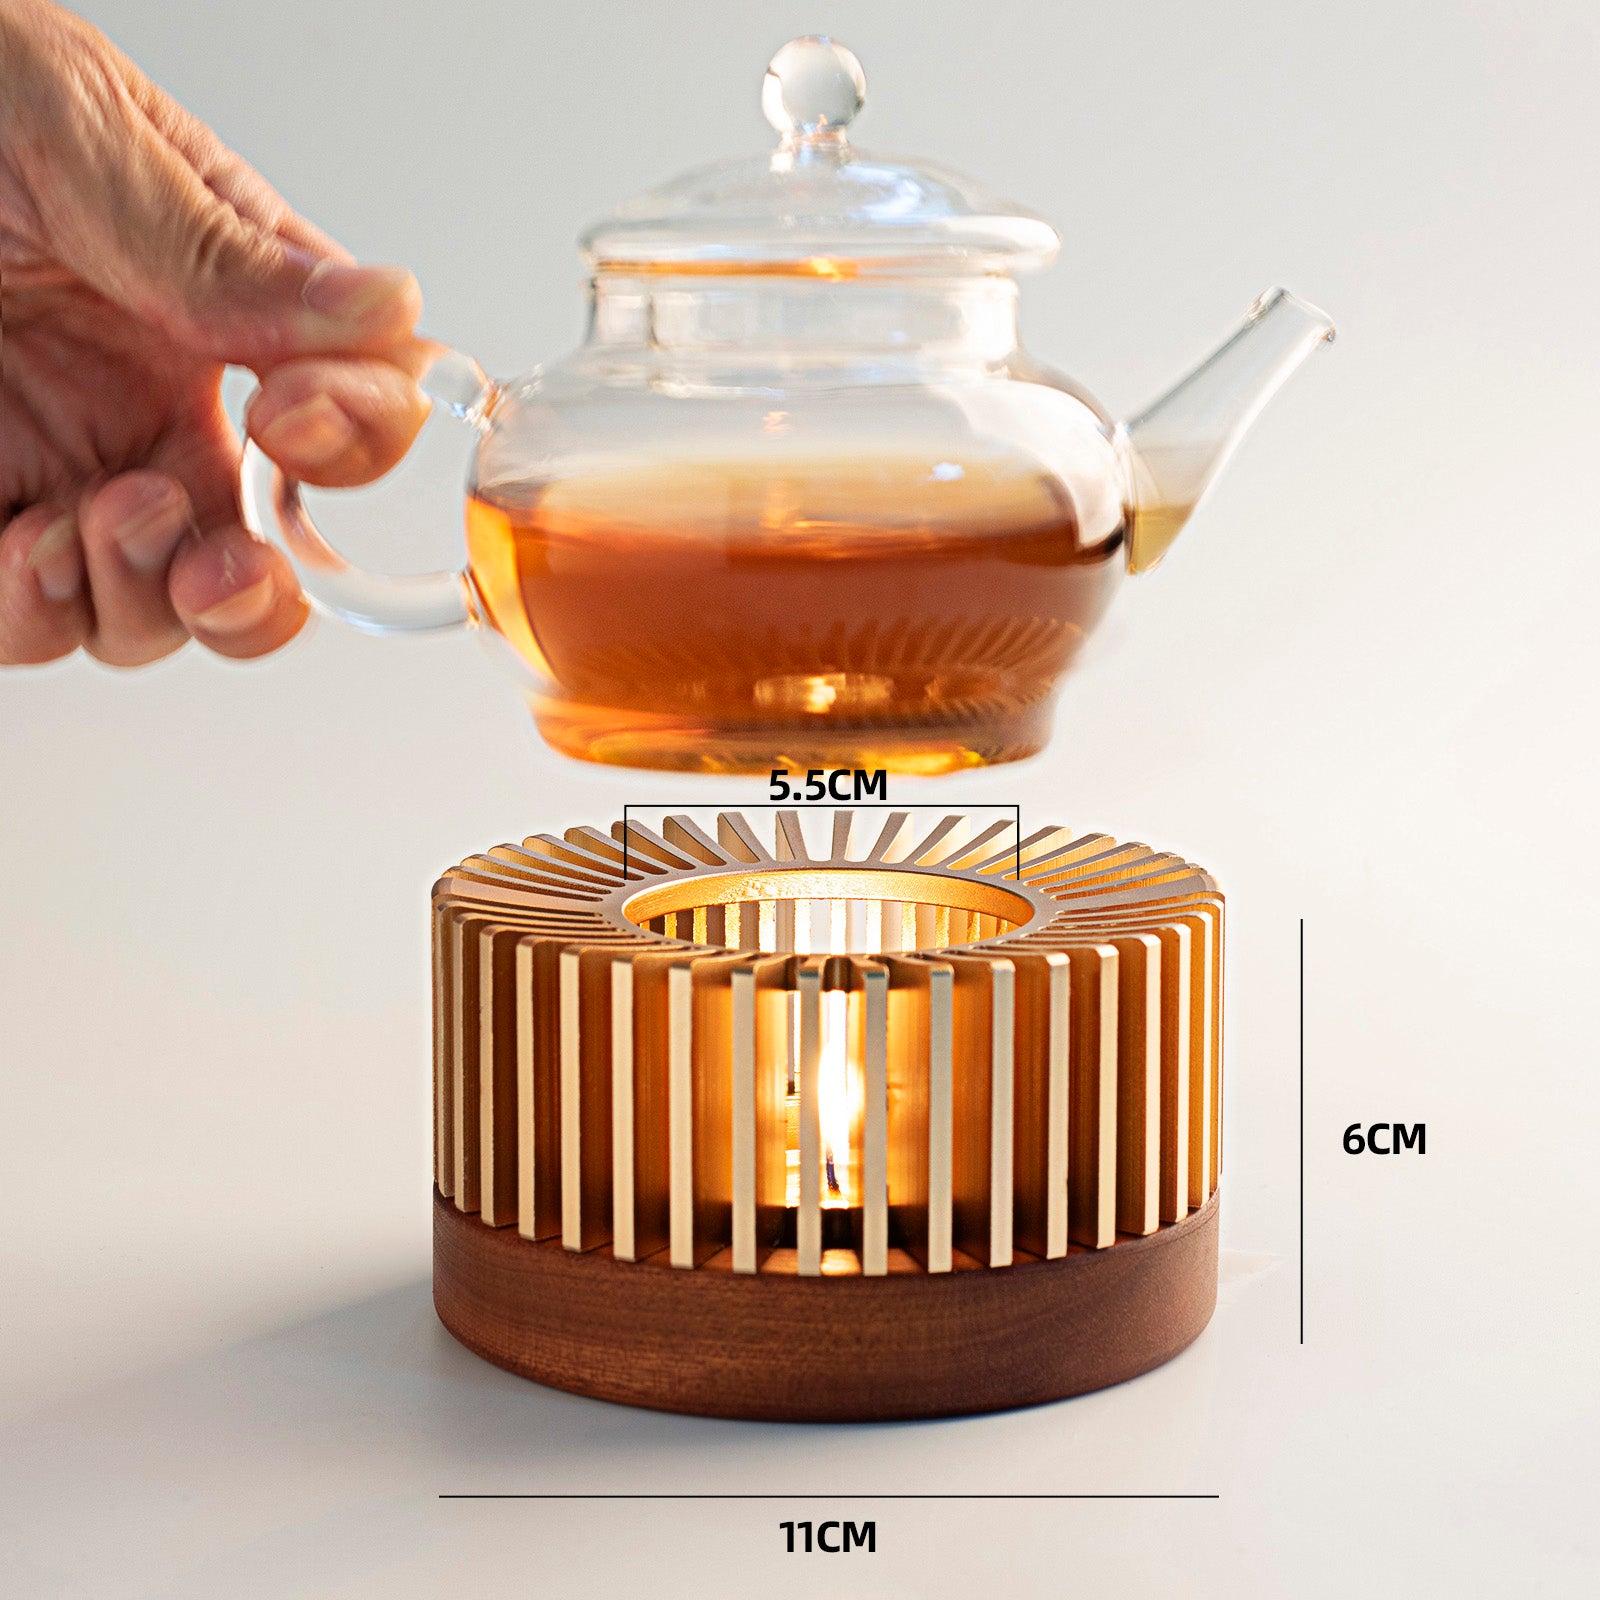 5 Best Teapot Warmers Of 2023 - Foods Guy